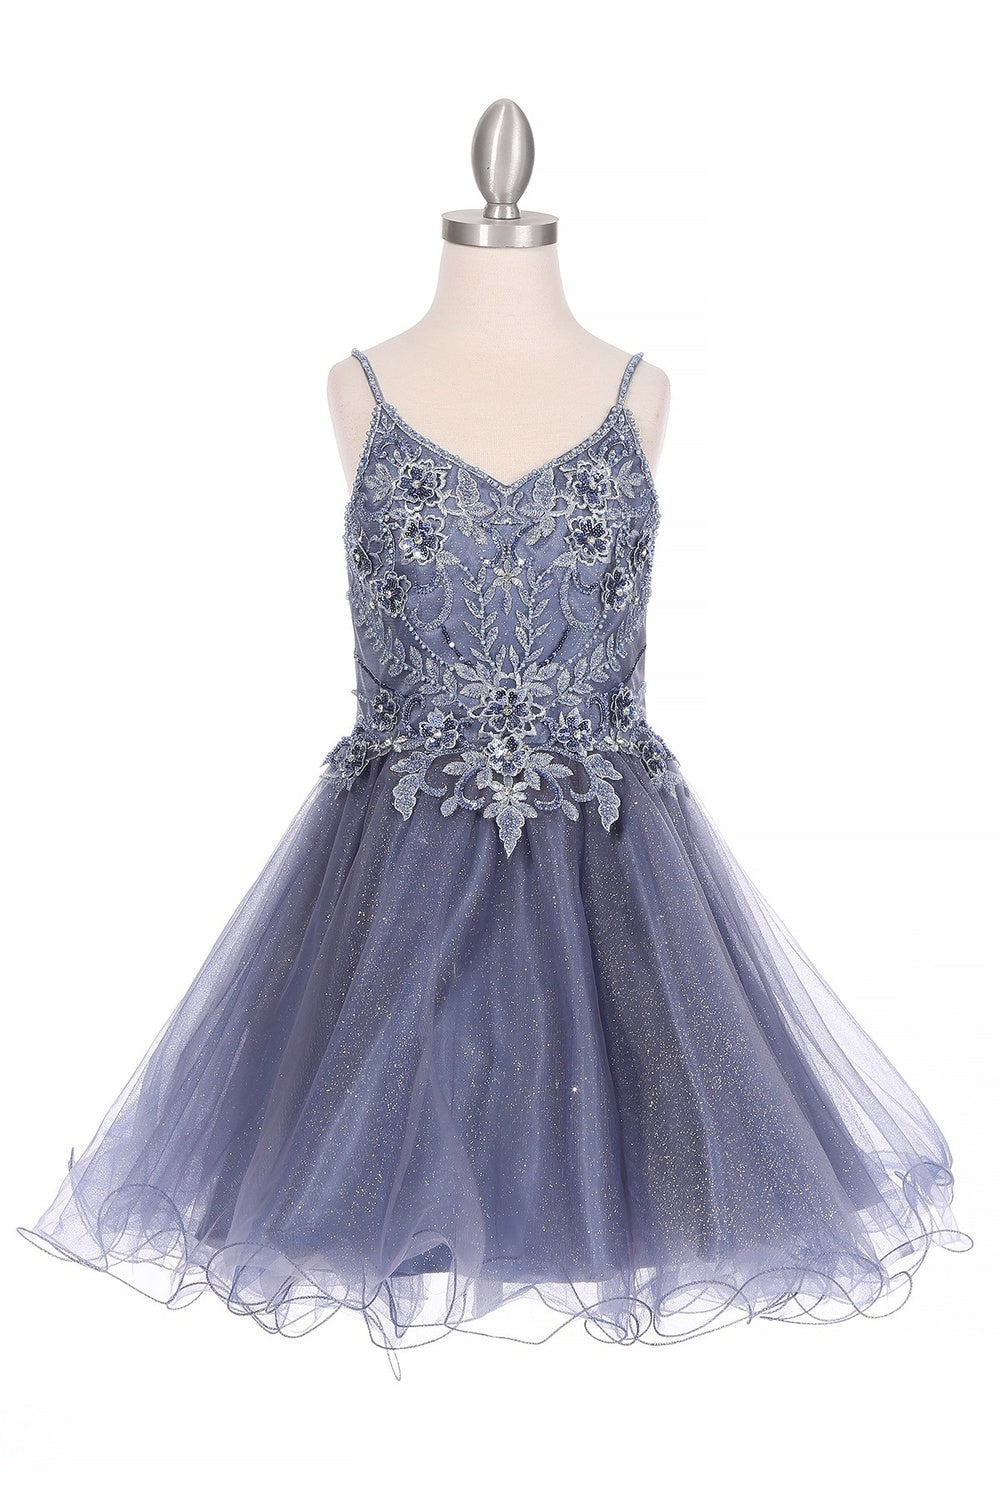 Elegant Illusion Sparkly Tulle A-Line Short Girl Dress CU5112X Elsy Style Kids Dress